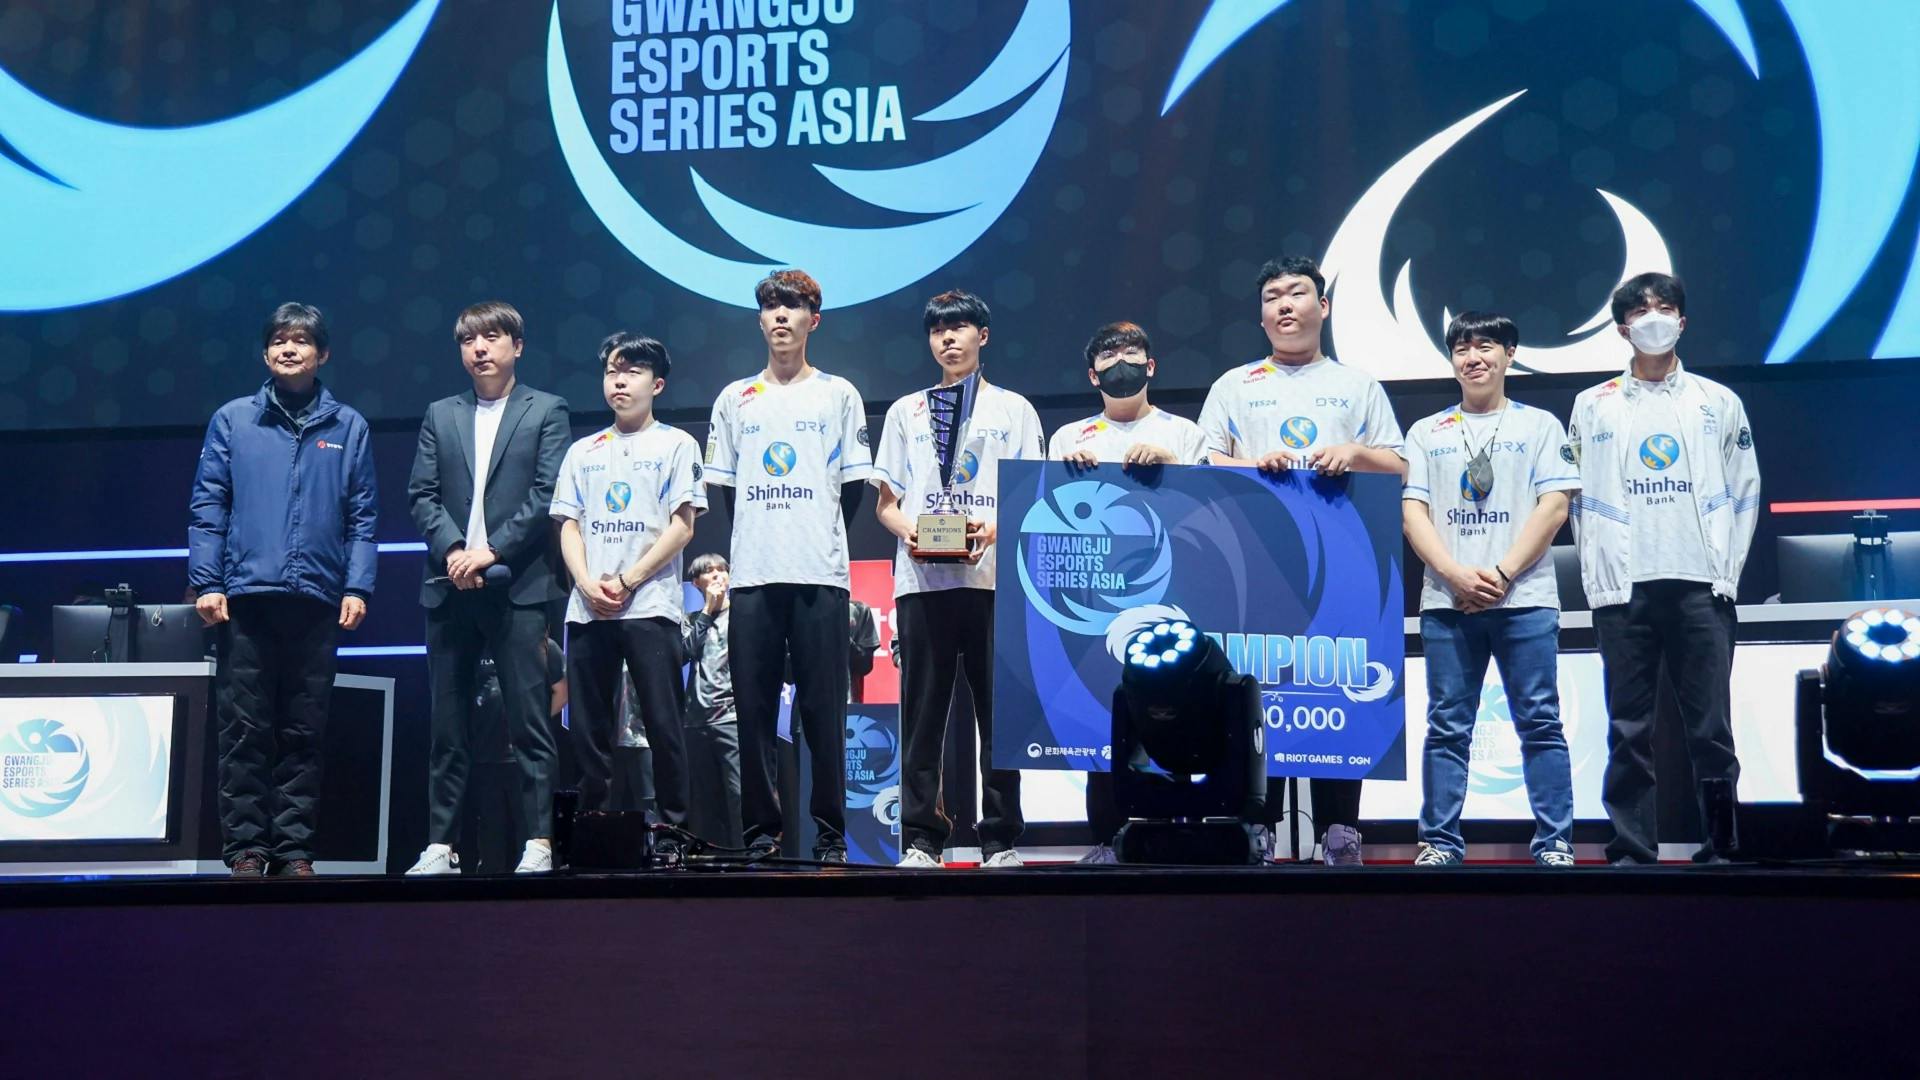 VCT Pacific Pre-Show: DRX lifts the Gwangju Esports Series Asia trophy